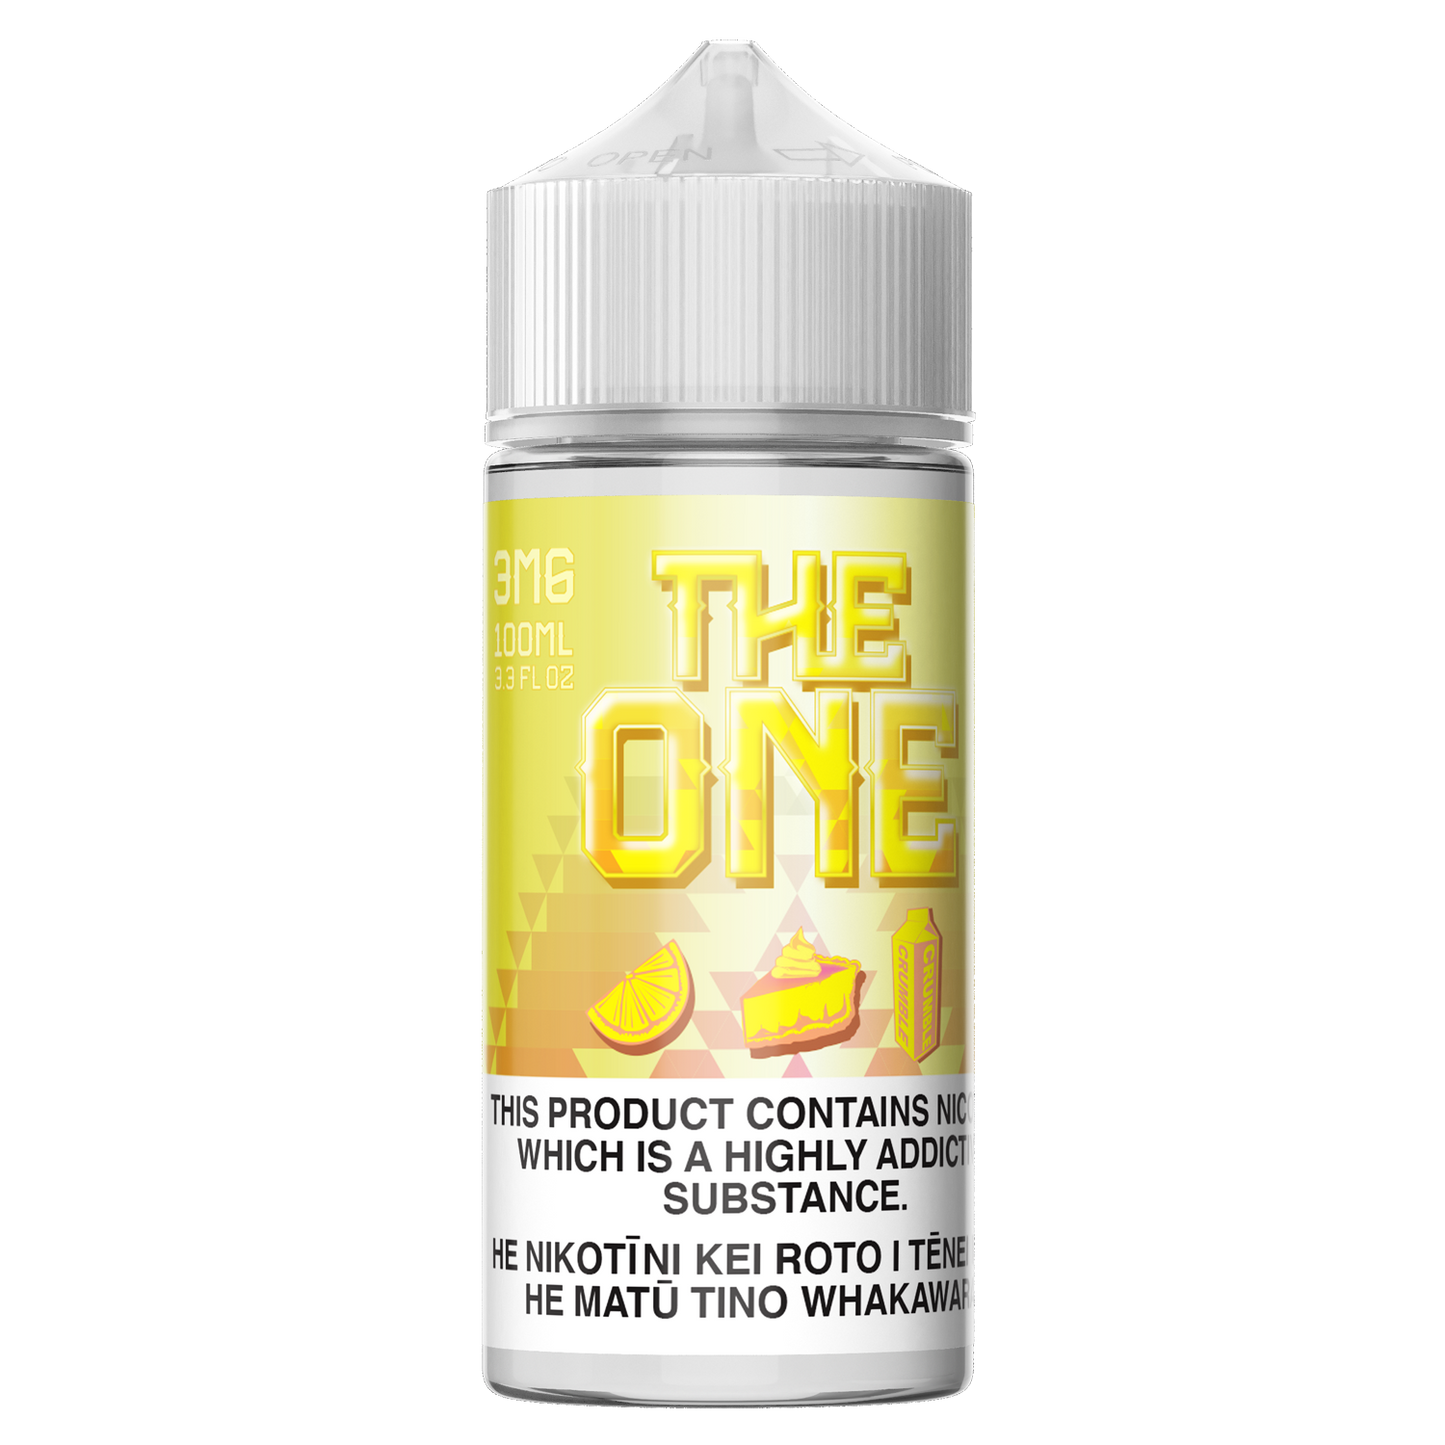 The One - Lemon 100 ml - Simply Vape